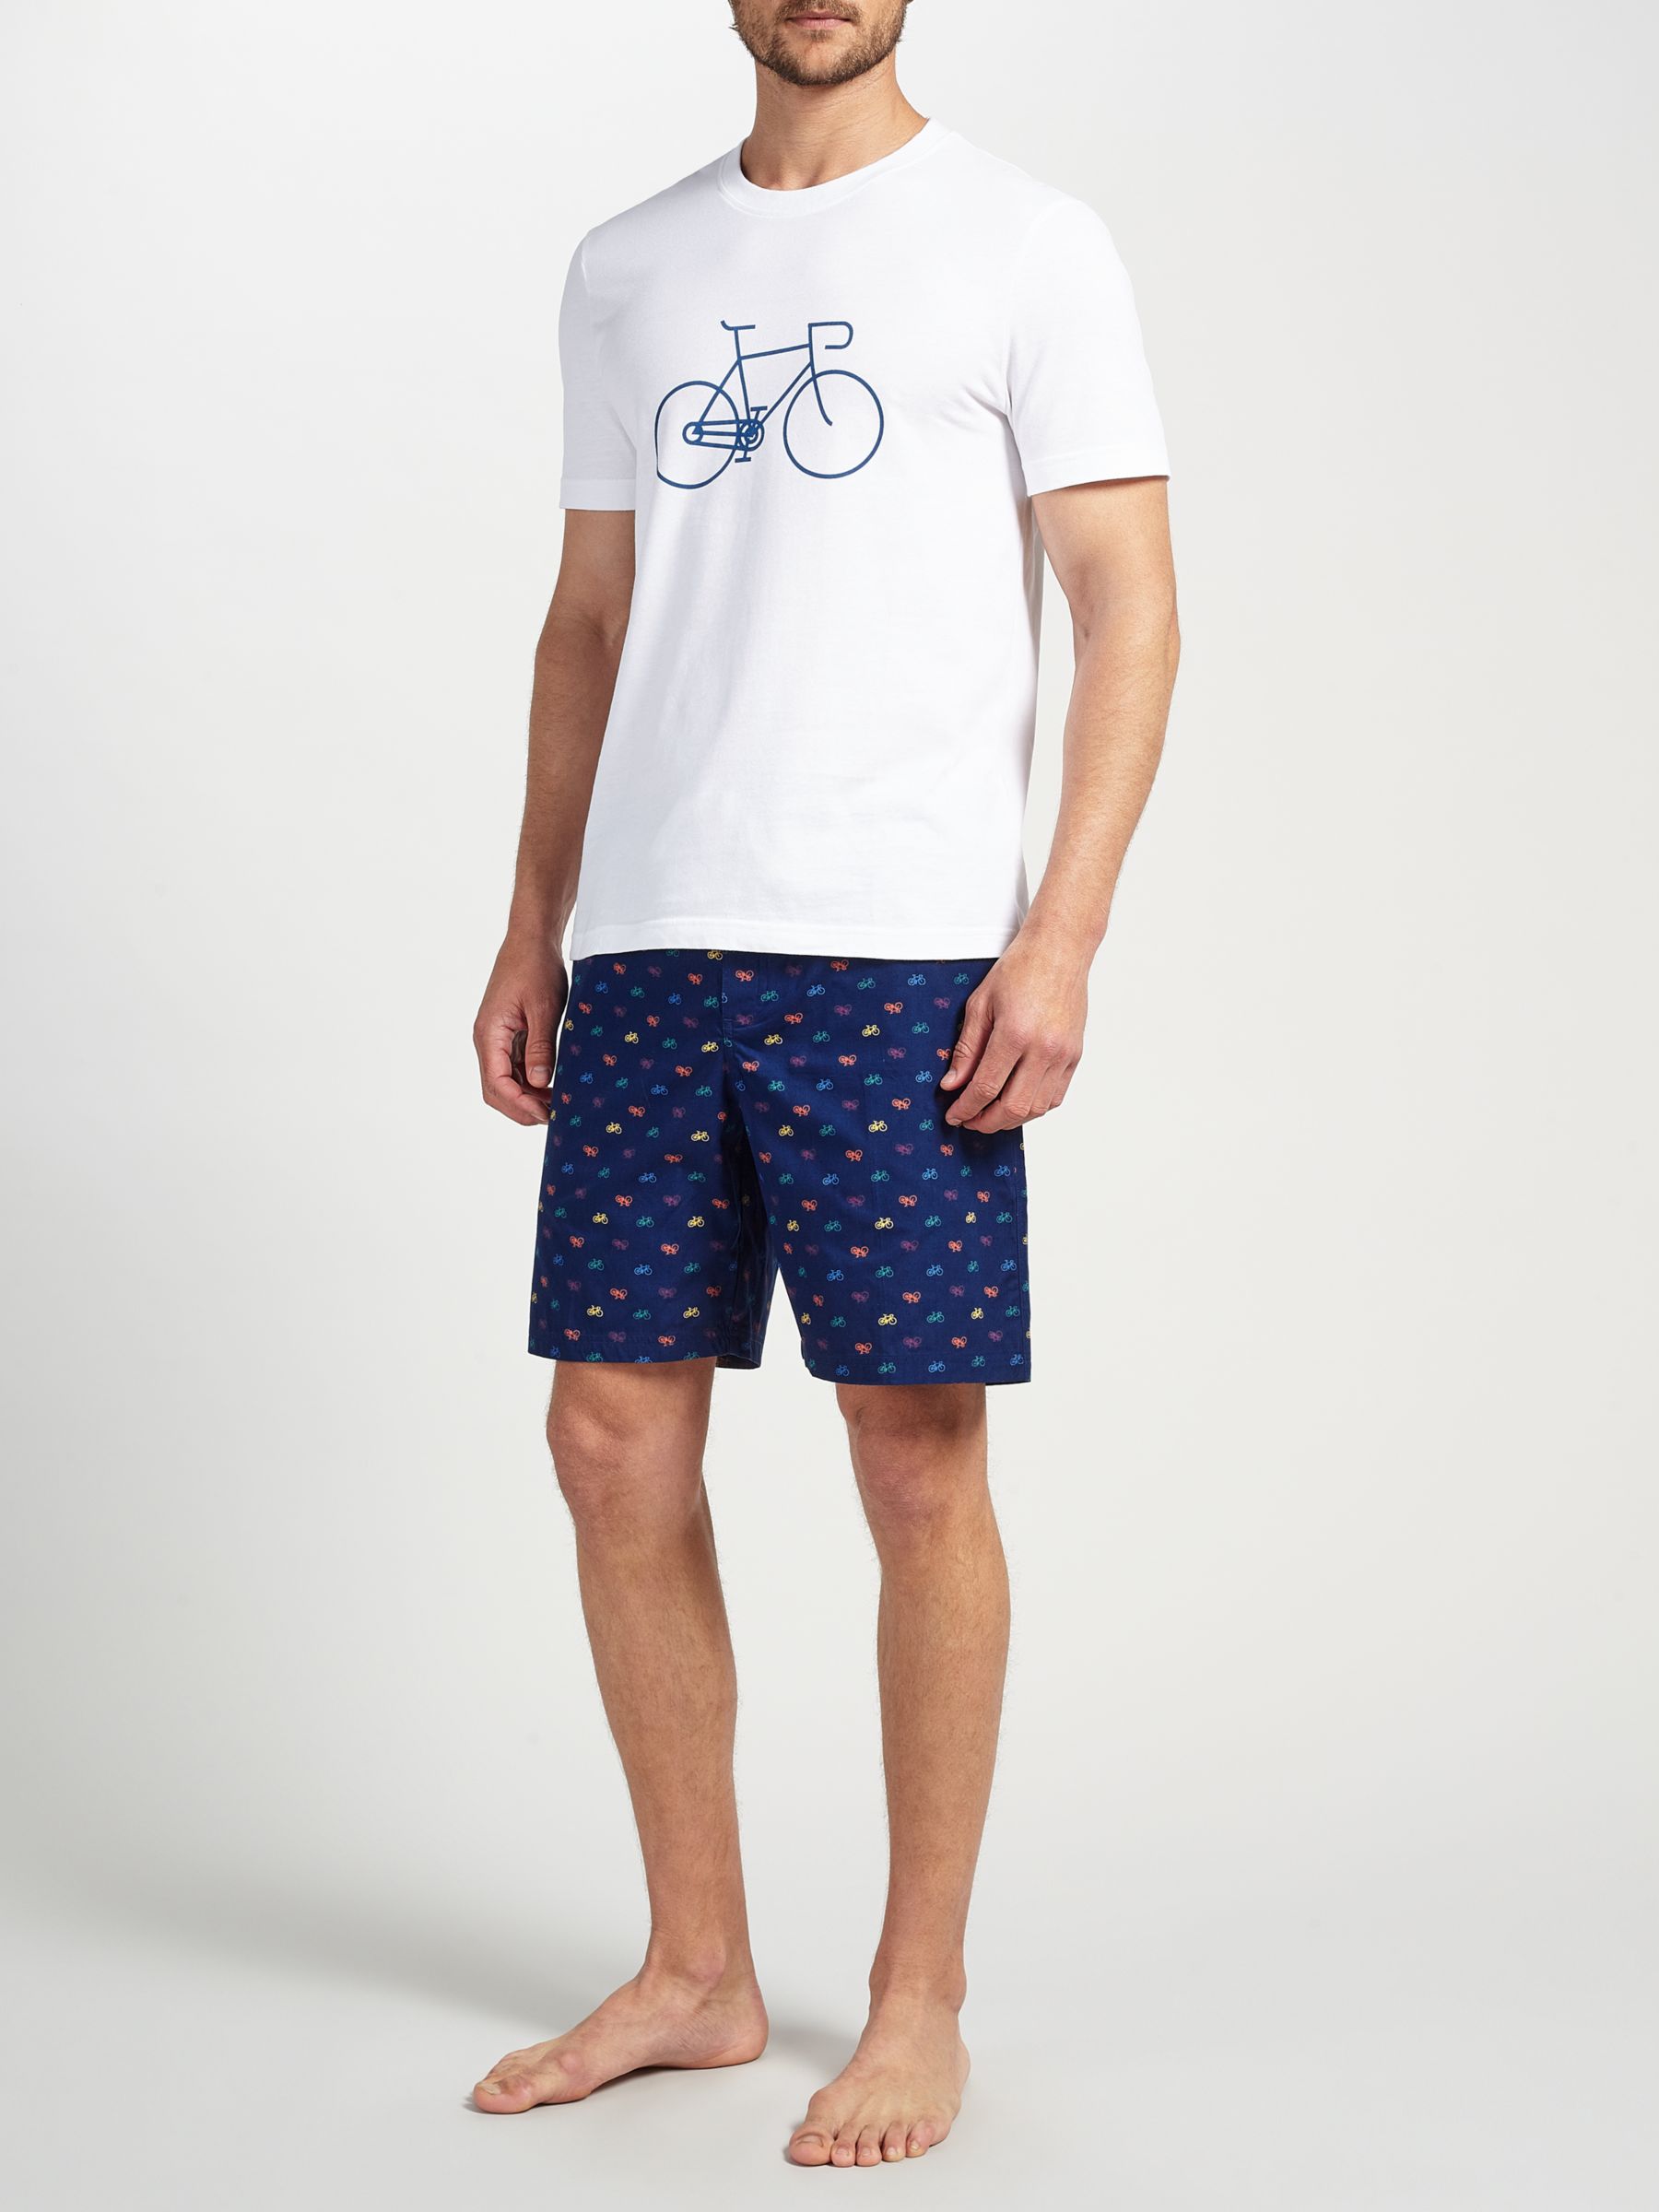 John Lewis & Partners Bike T-Shirt and Shorts Lounge Gift Set, White/Navy